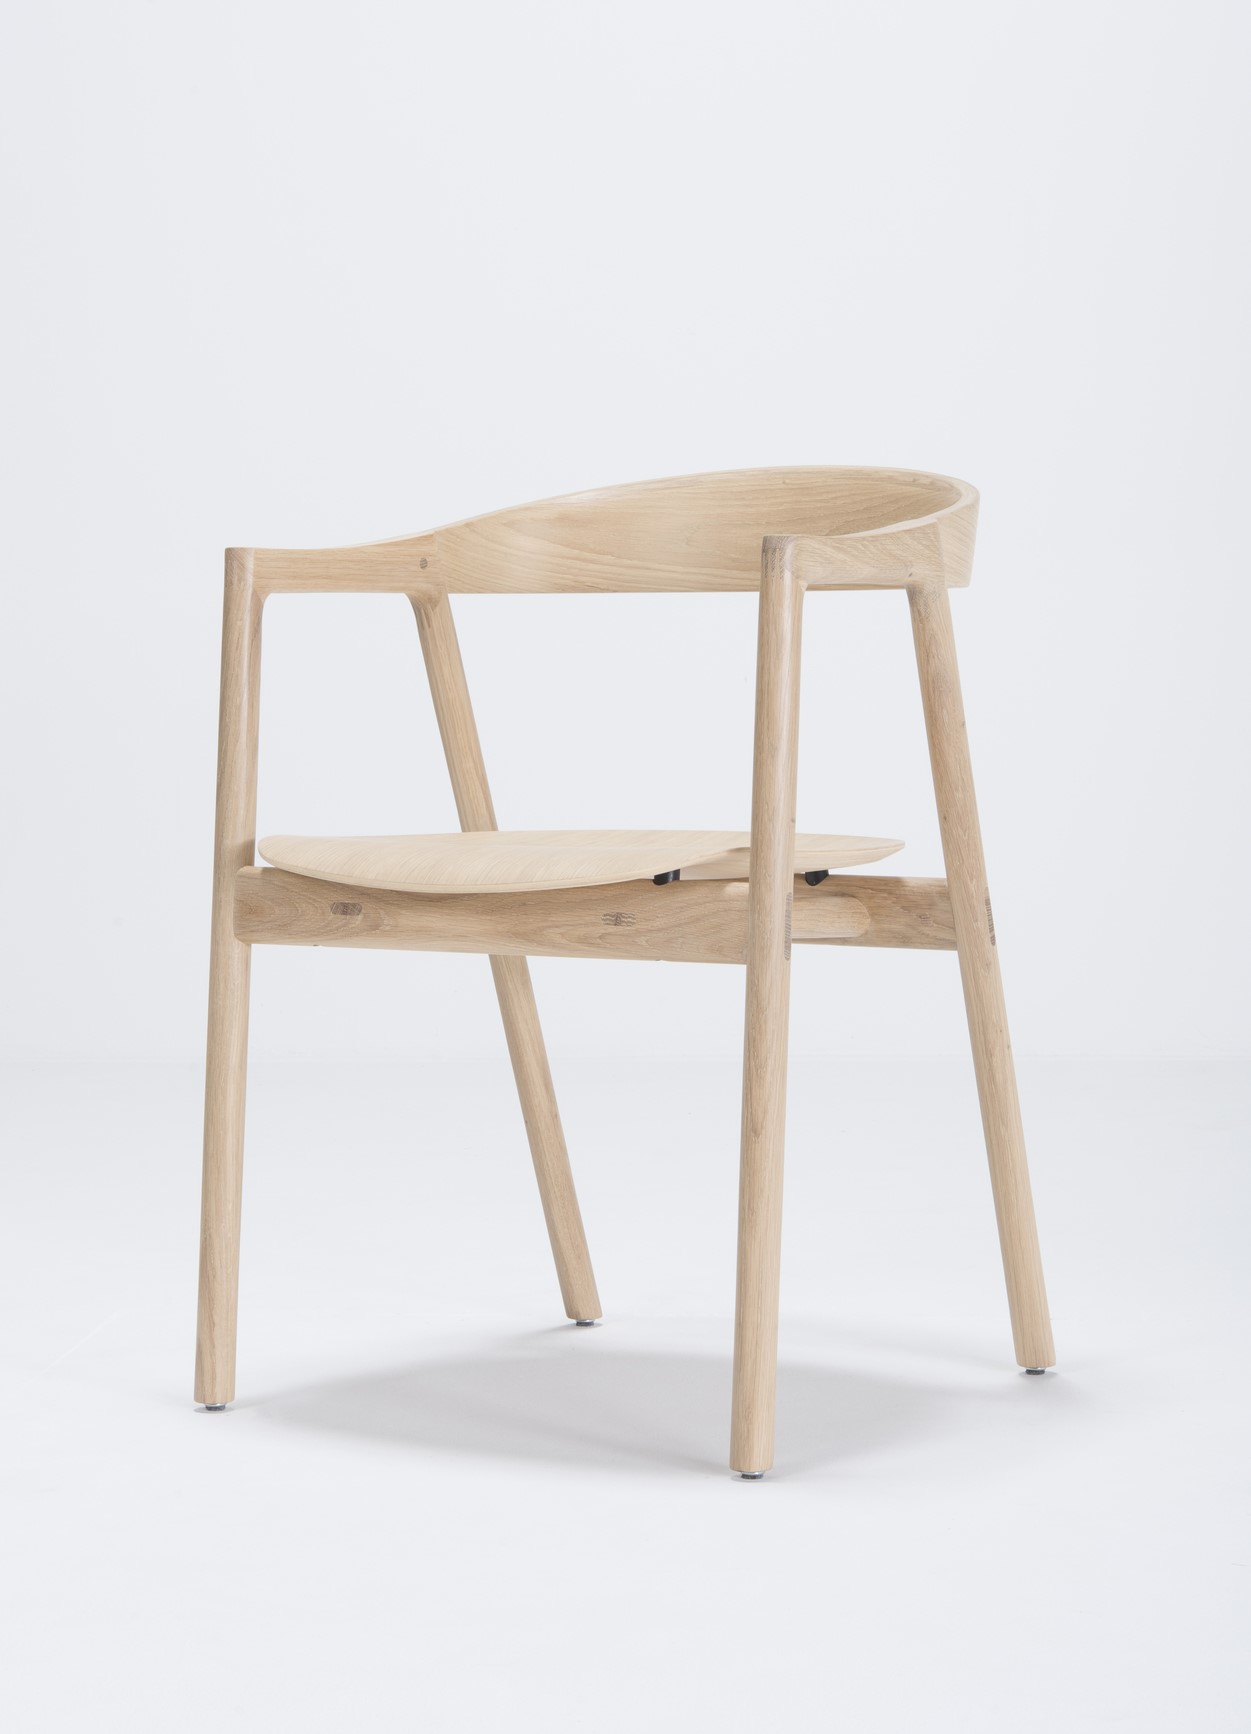 mq-st-muna-chair-54x53x75-oak-white-1015-venner-6